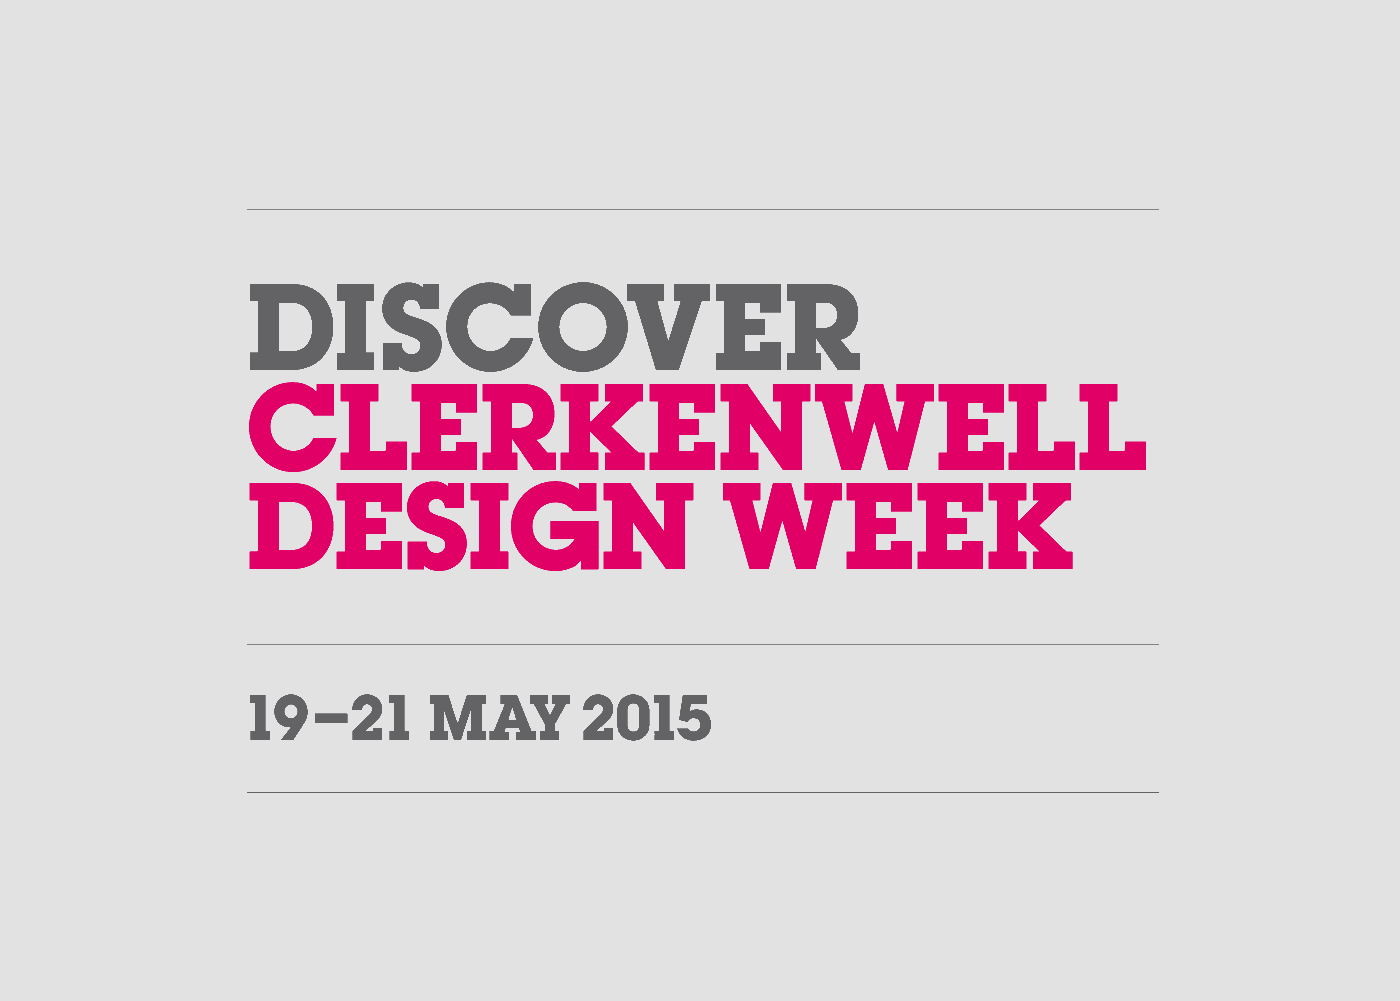 mydesignweek-clerkenwell-design-week-